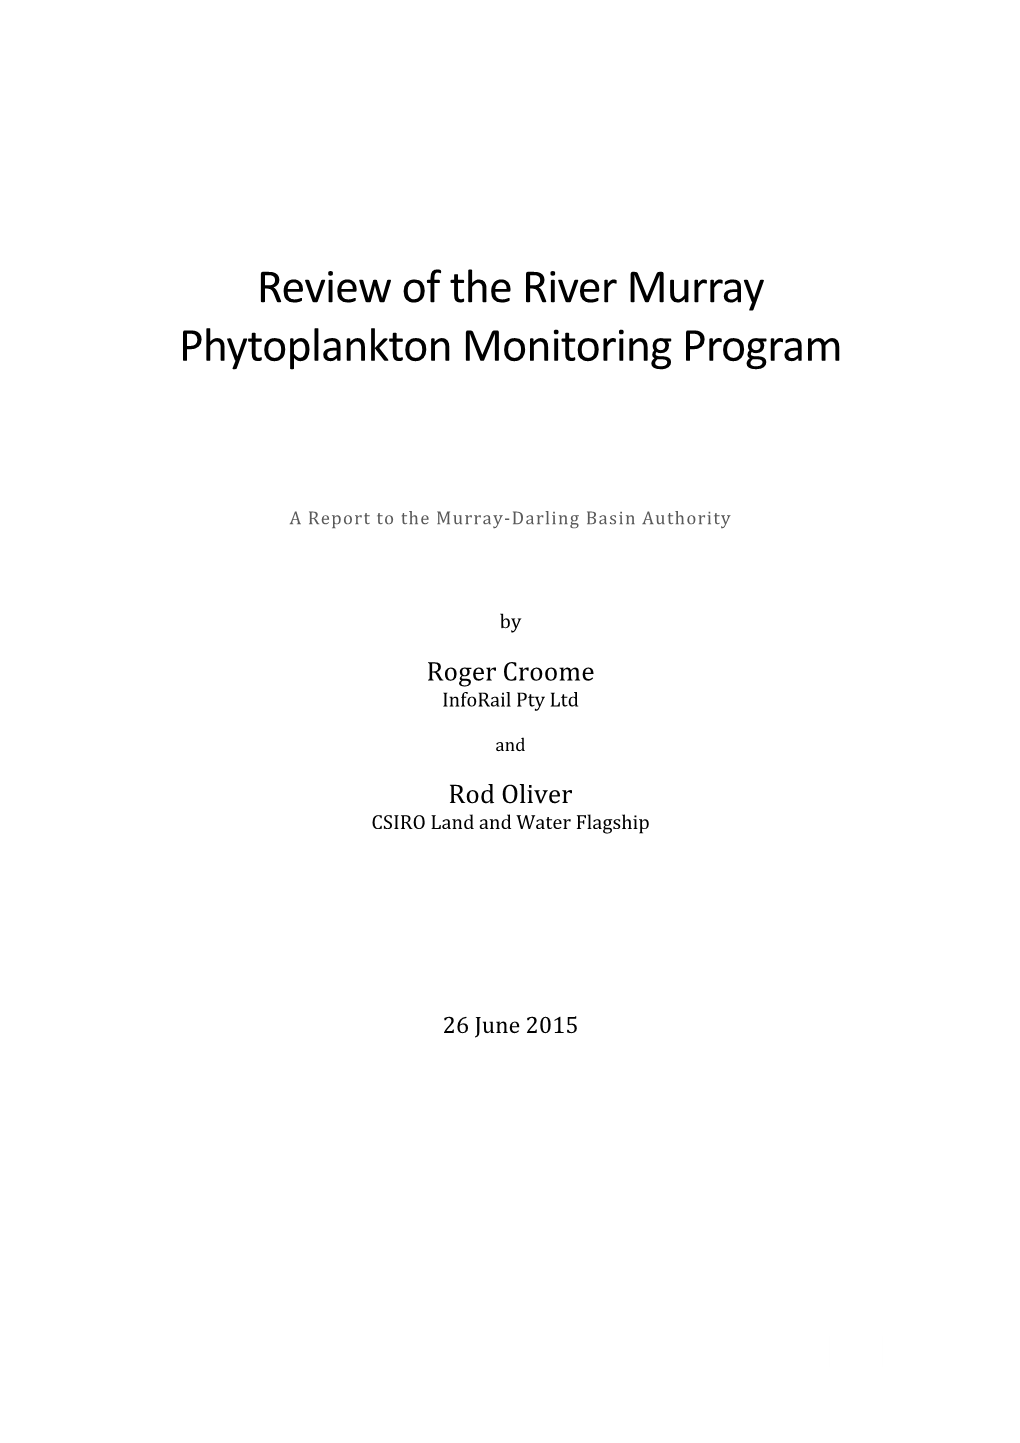 River Murray Phytoplankton Monitoring Program Review 2015